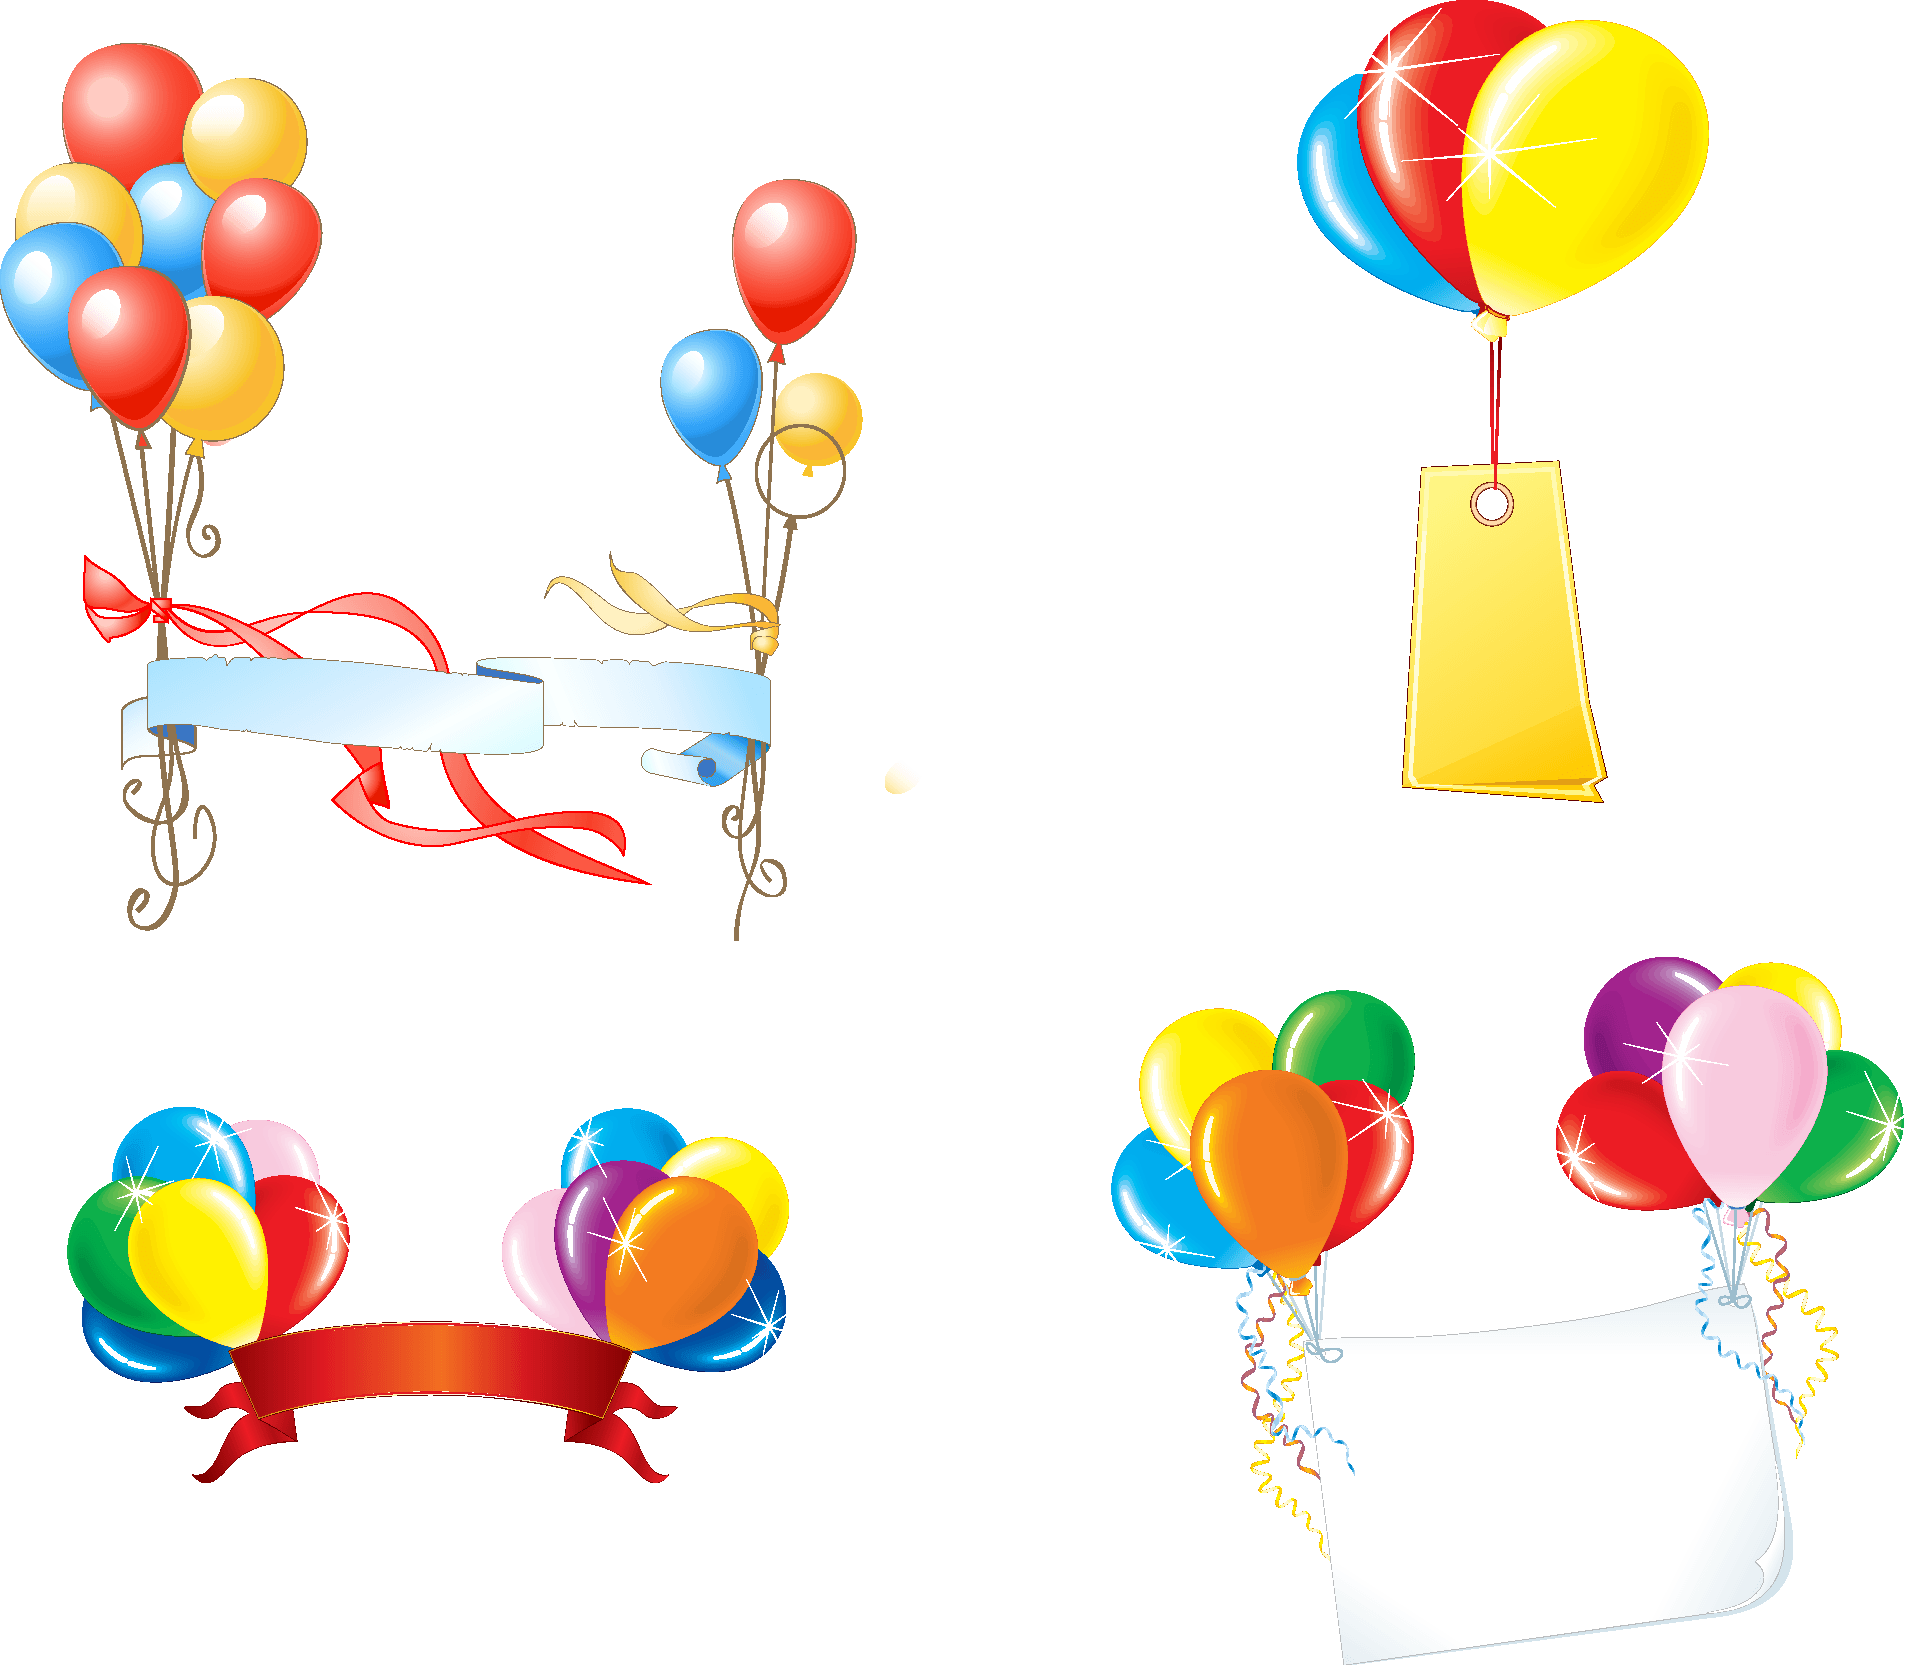 Party Balloons Vectors 01